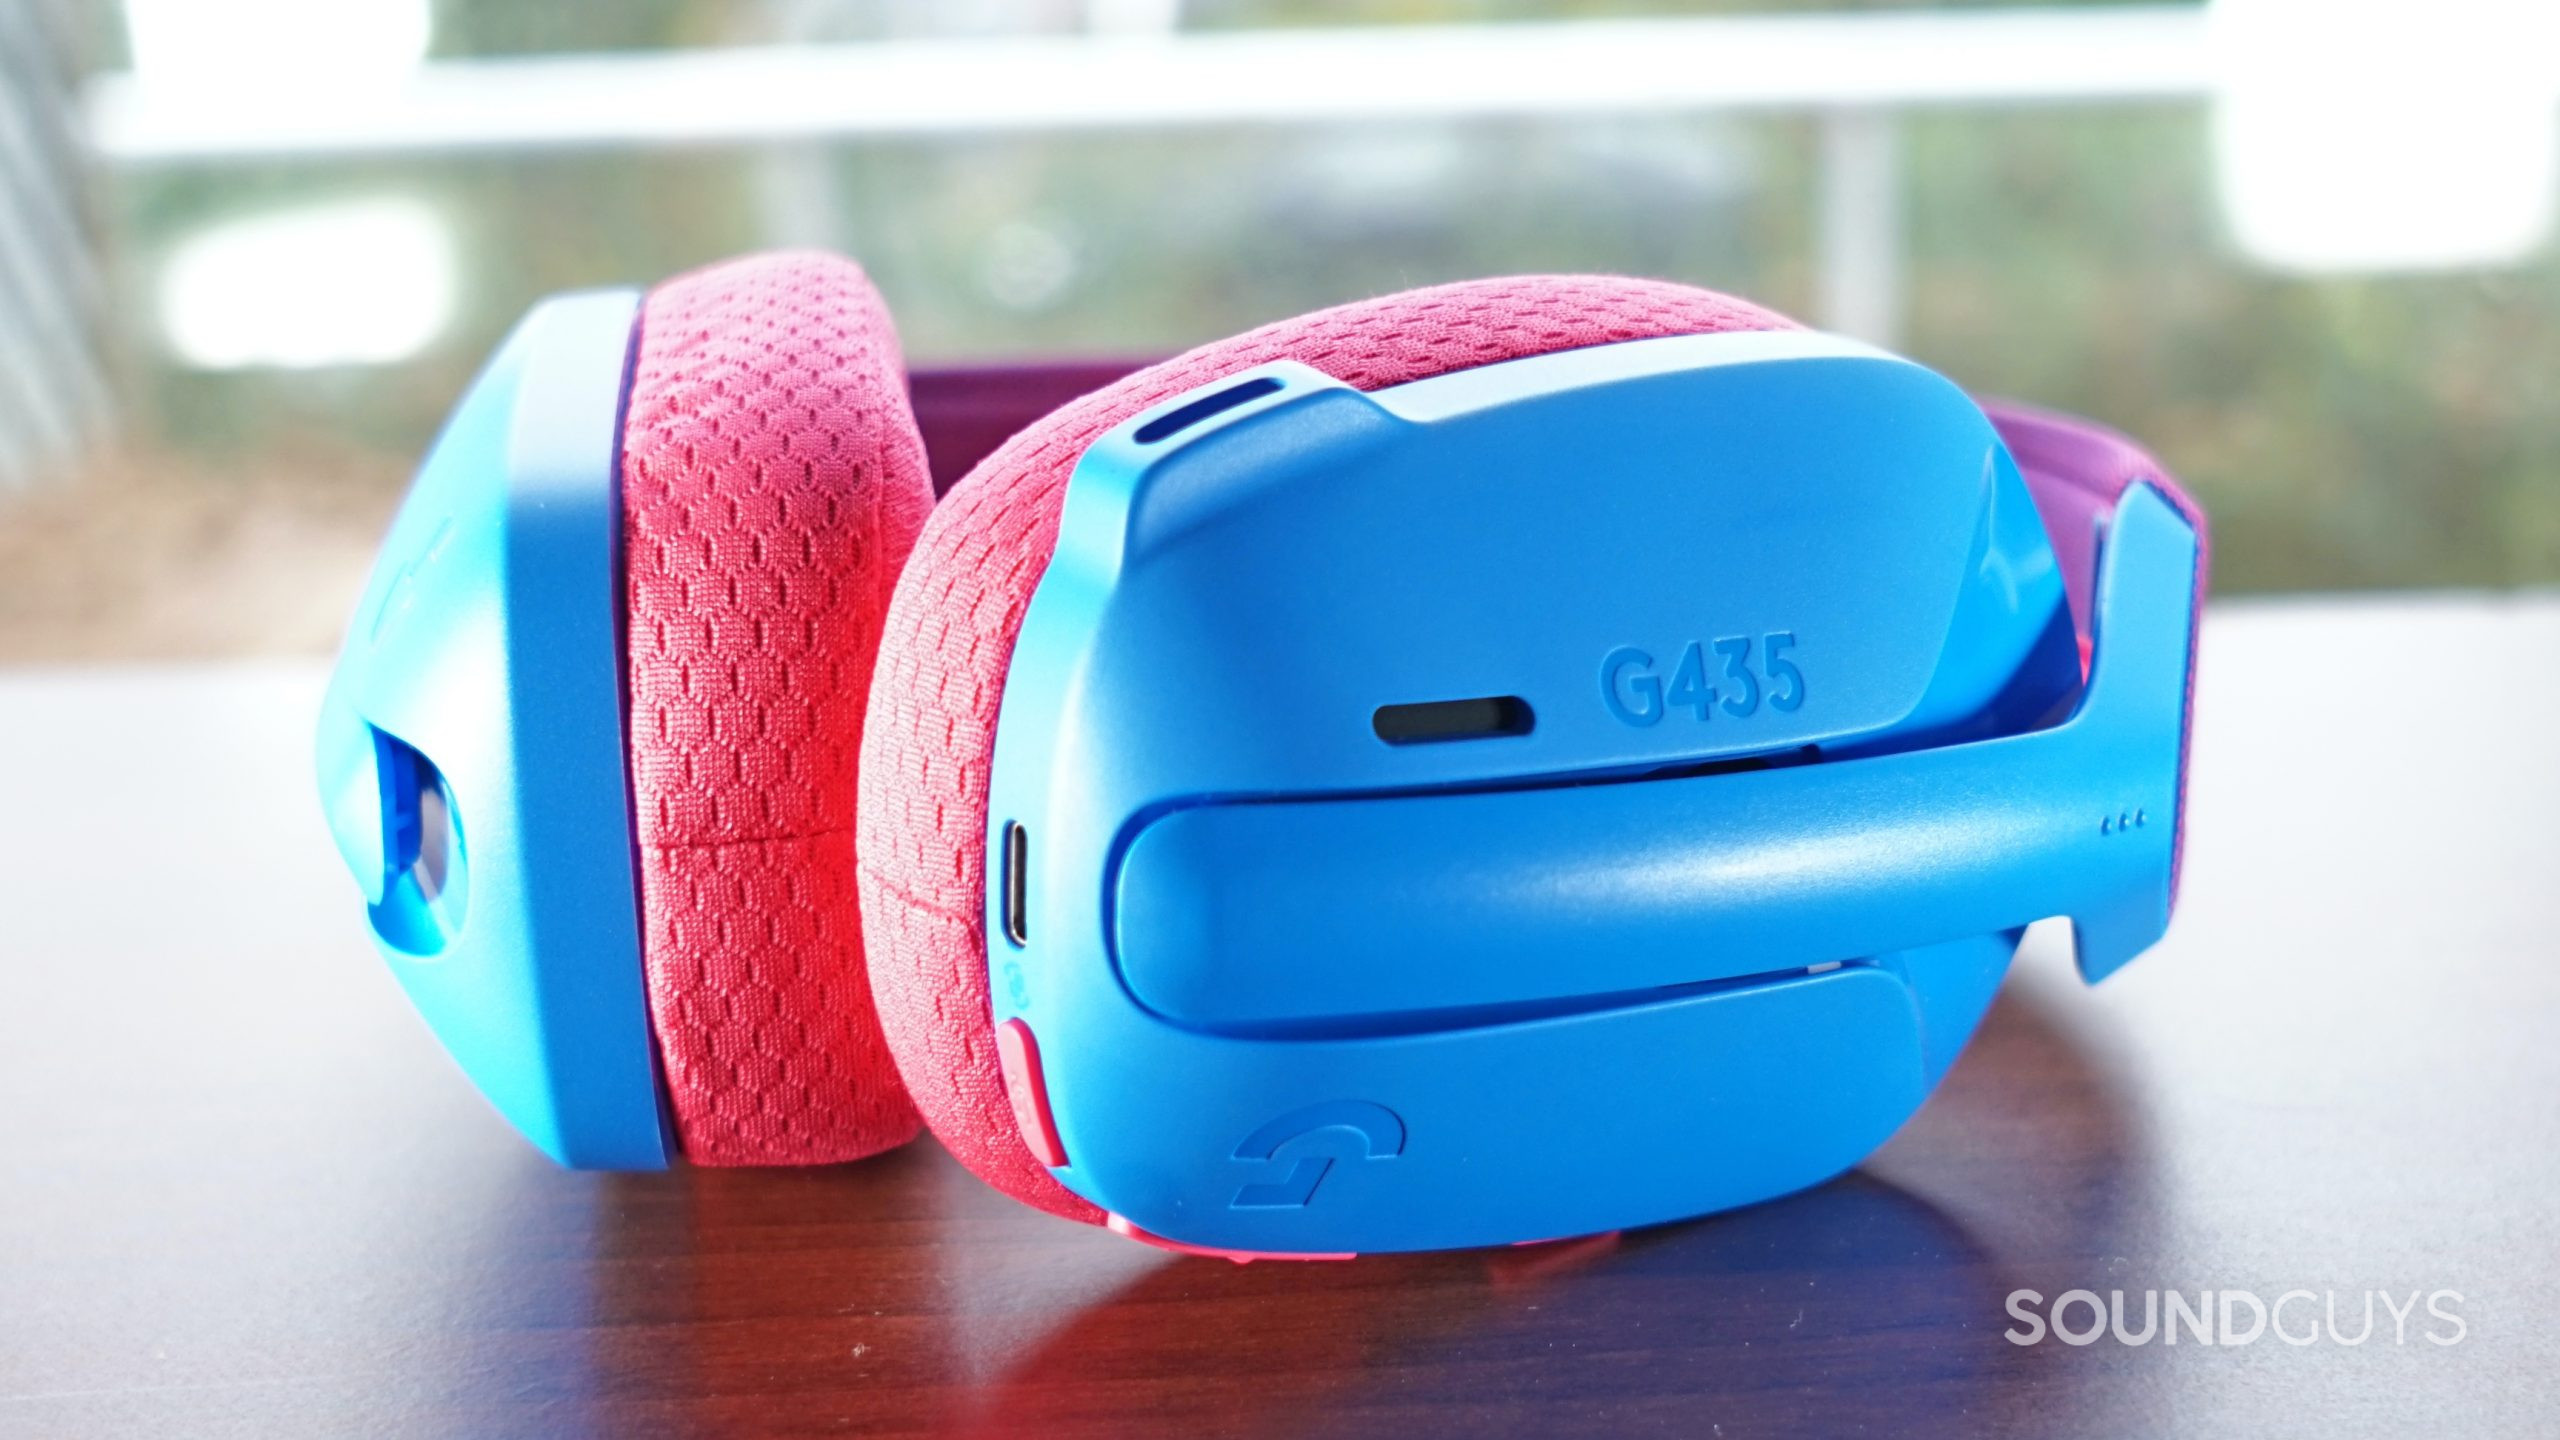 Logitech G435 wireless gaming headset: Embrace wireless freedom